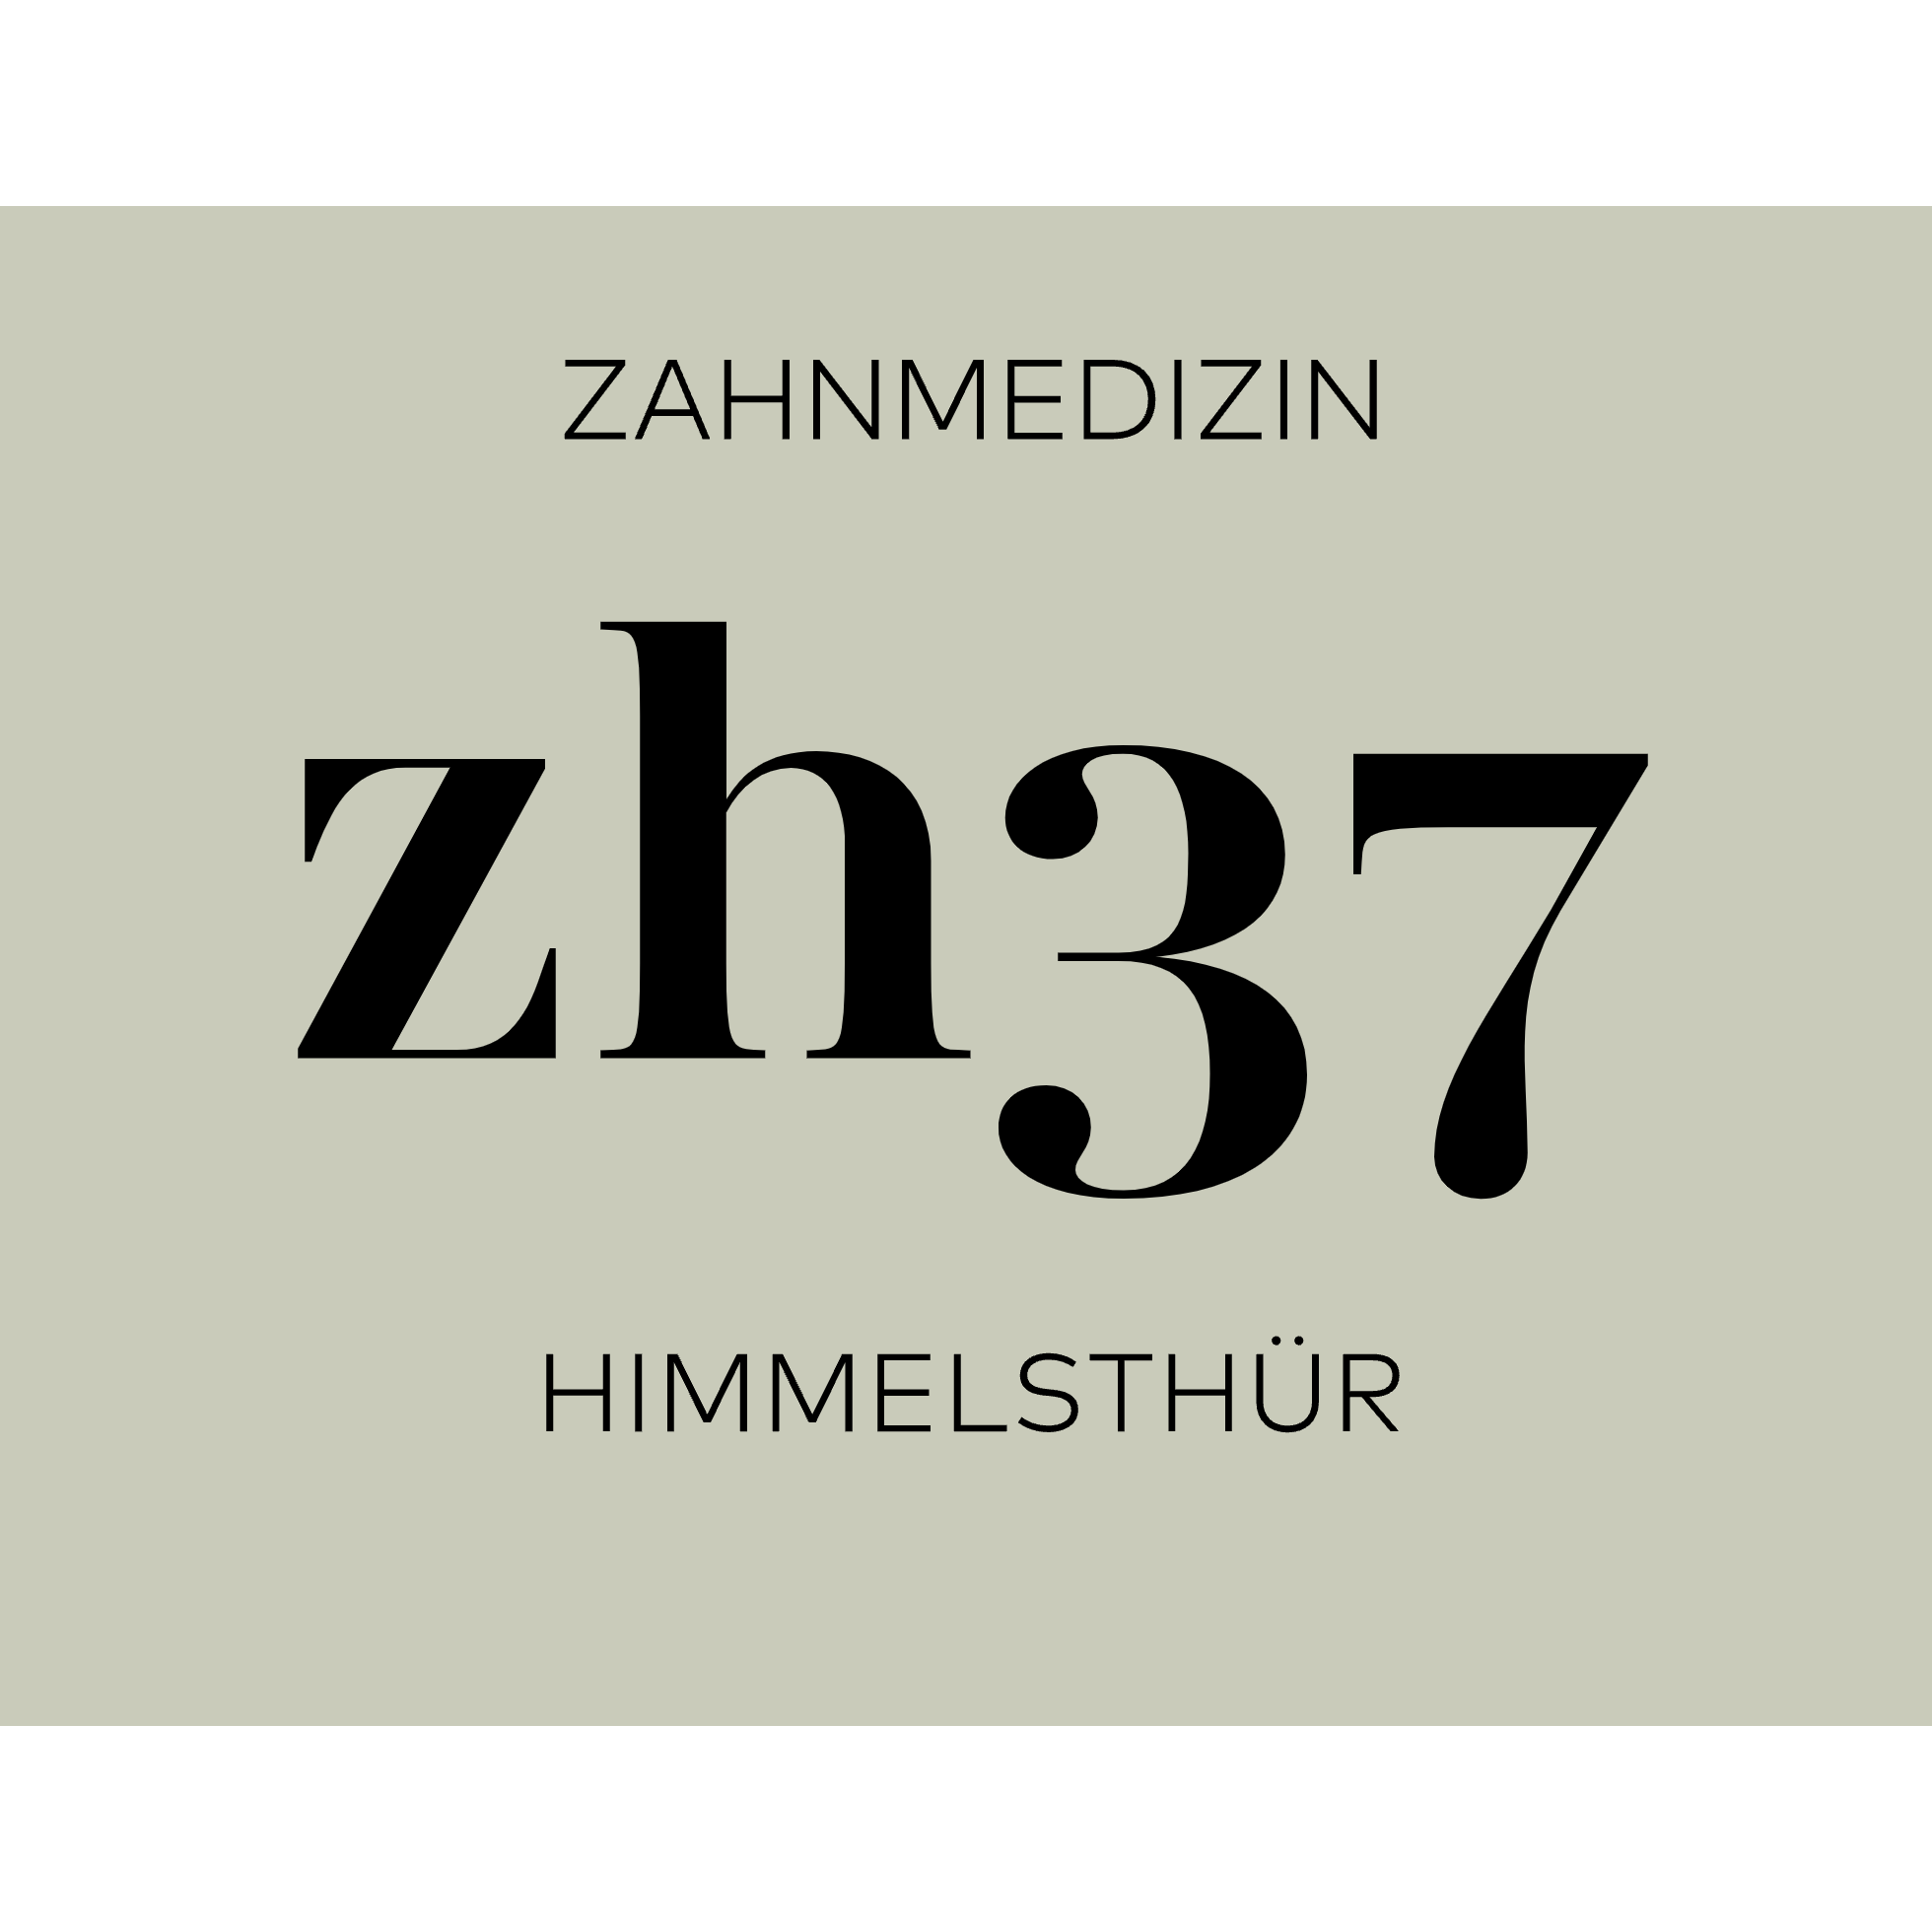 Zahnmedizin Himmelsthür zh37 in Hildesheim - Logo